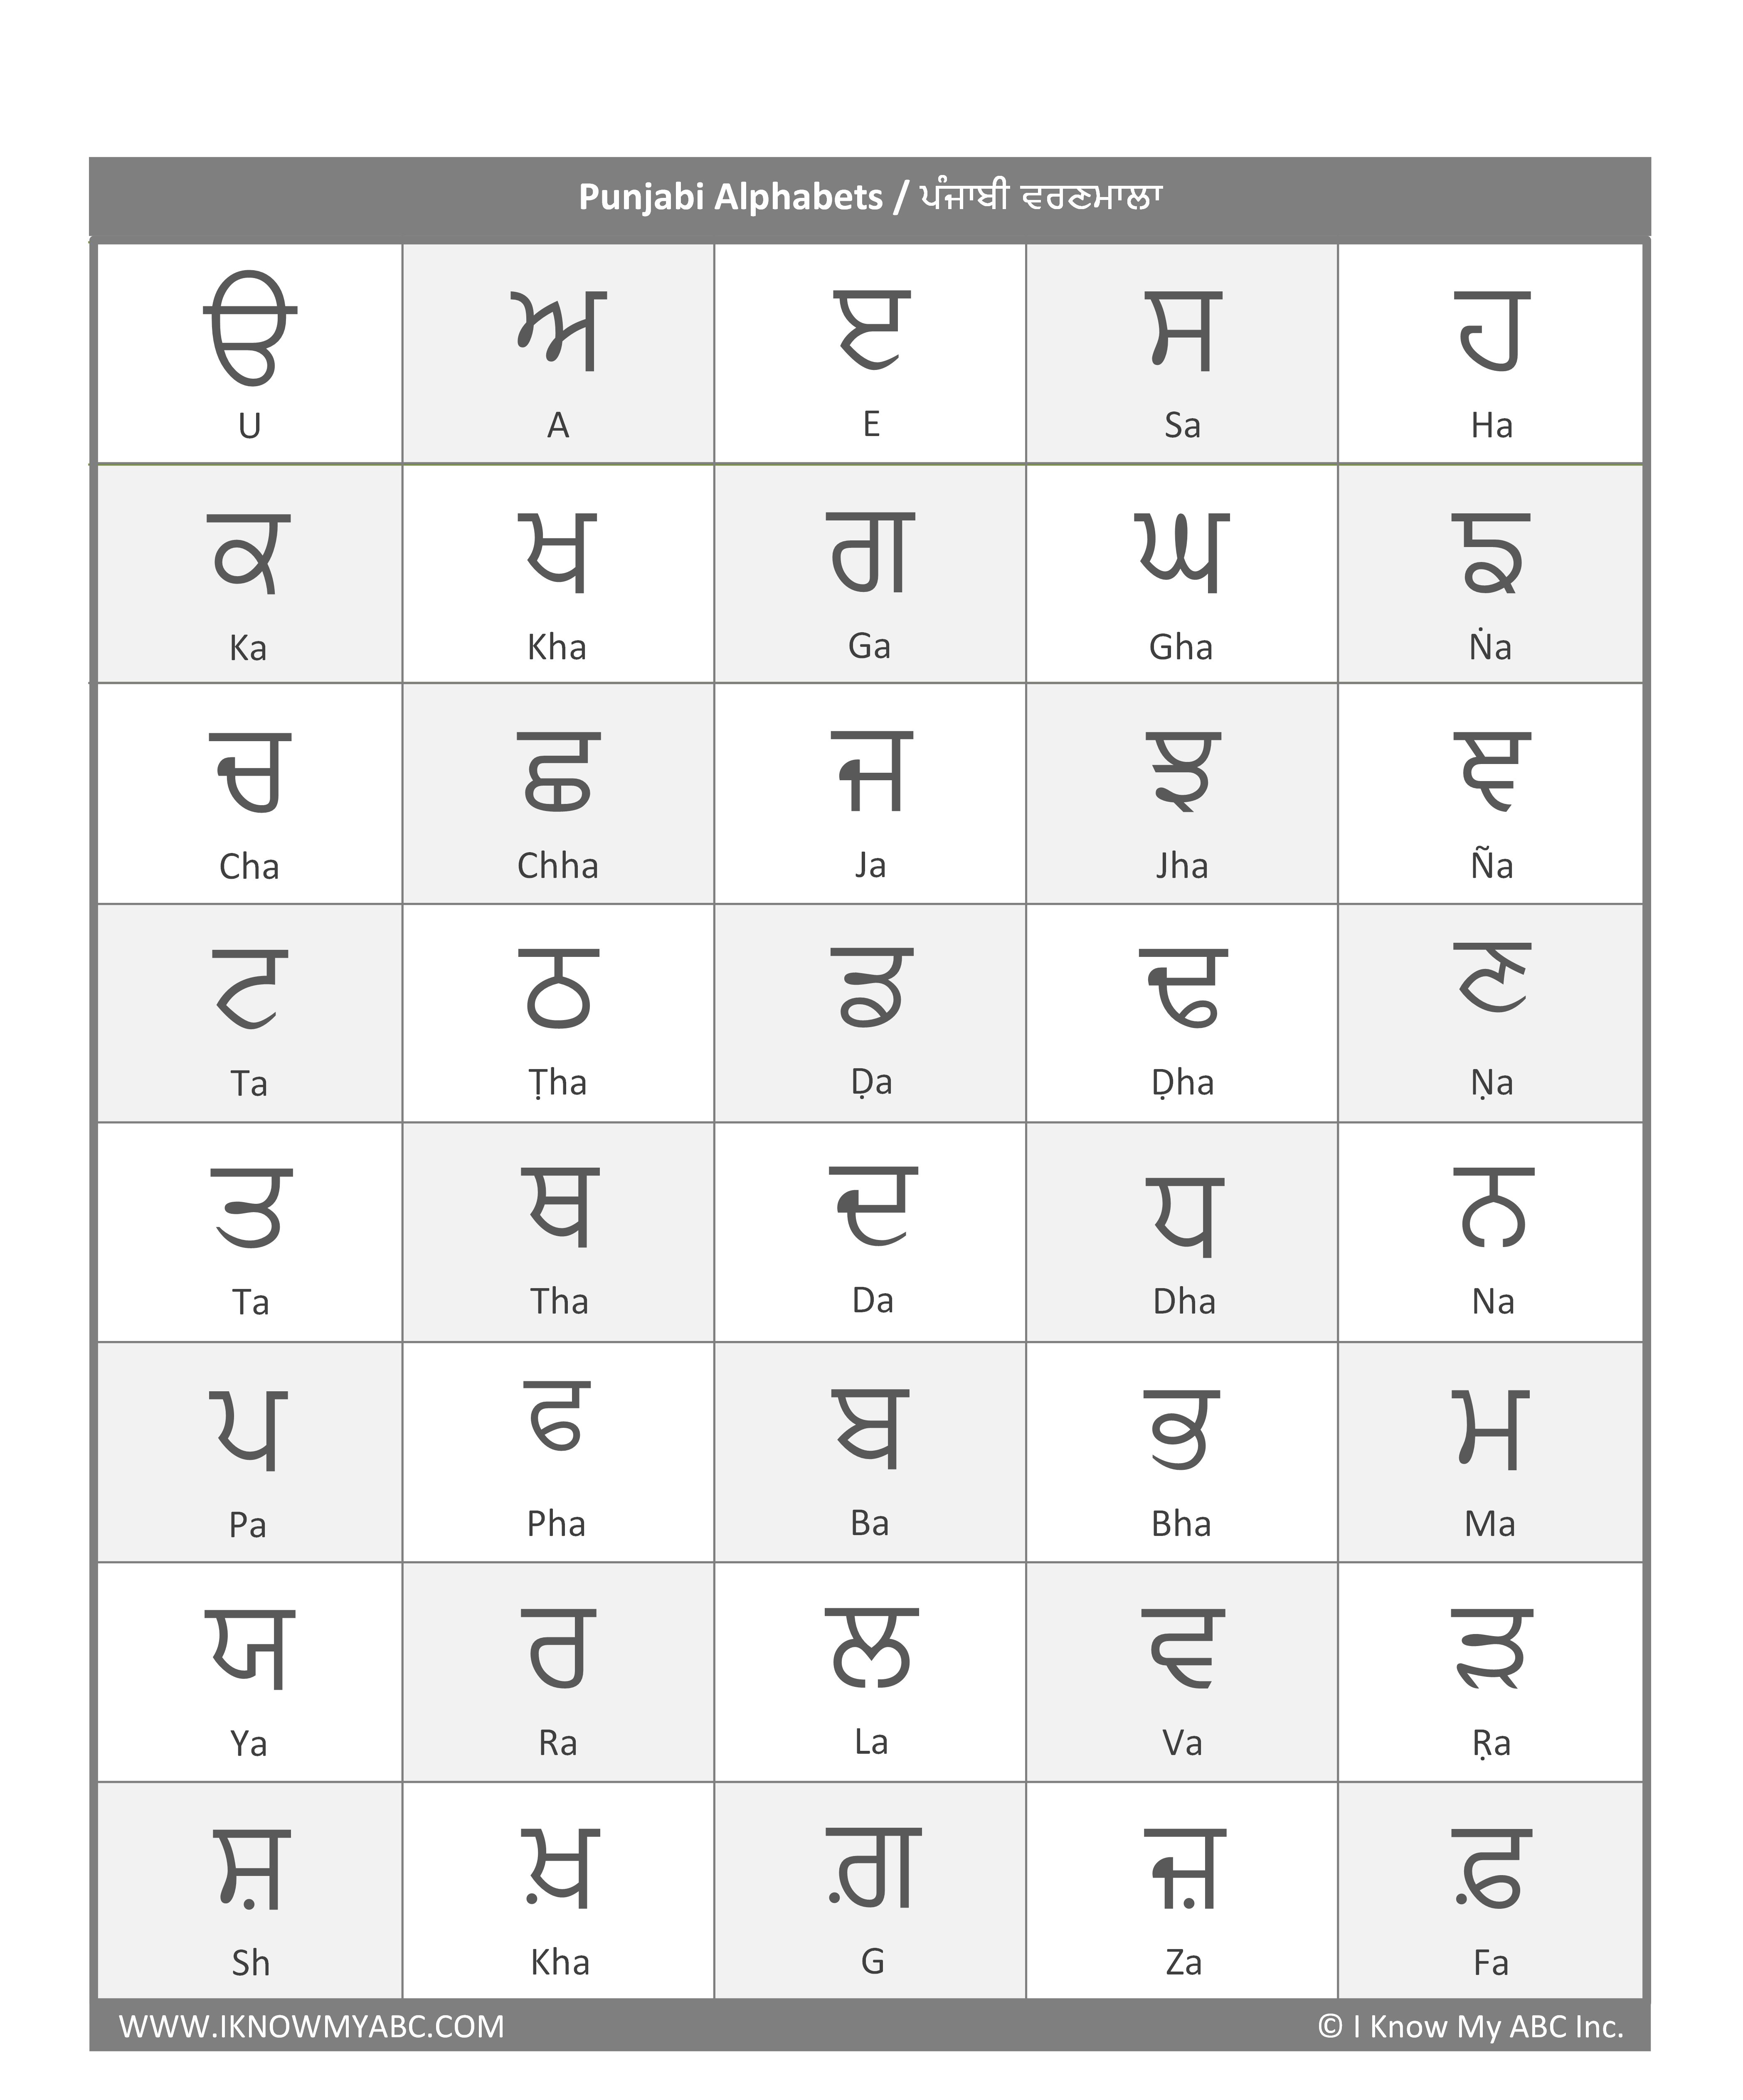 learn punjabi alphabet free educational resources i know my abc inc